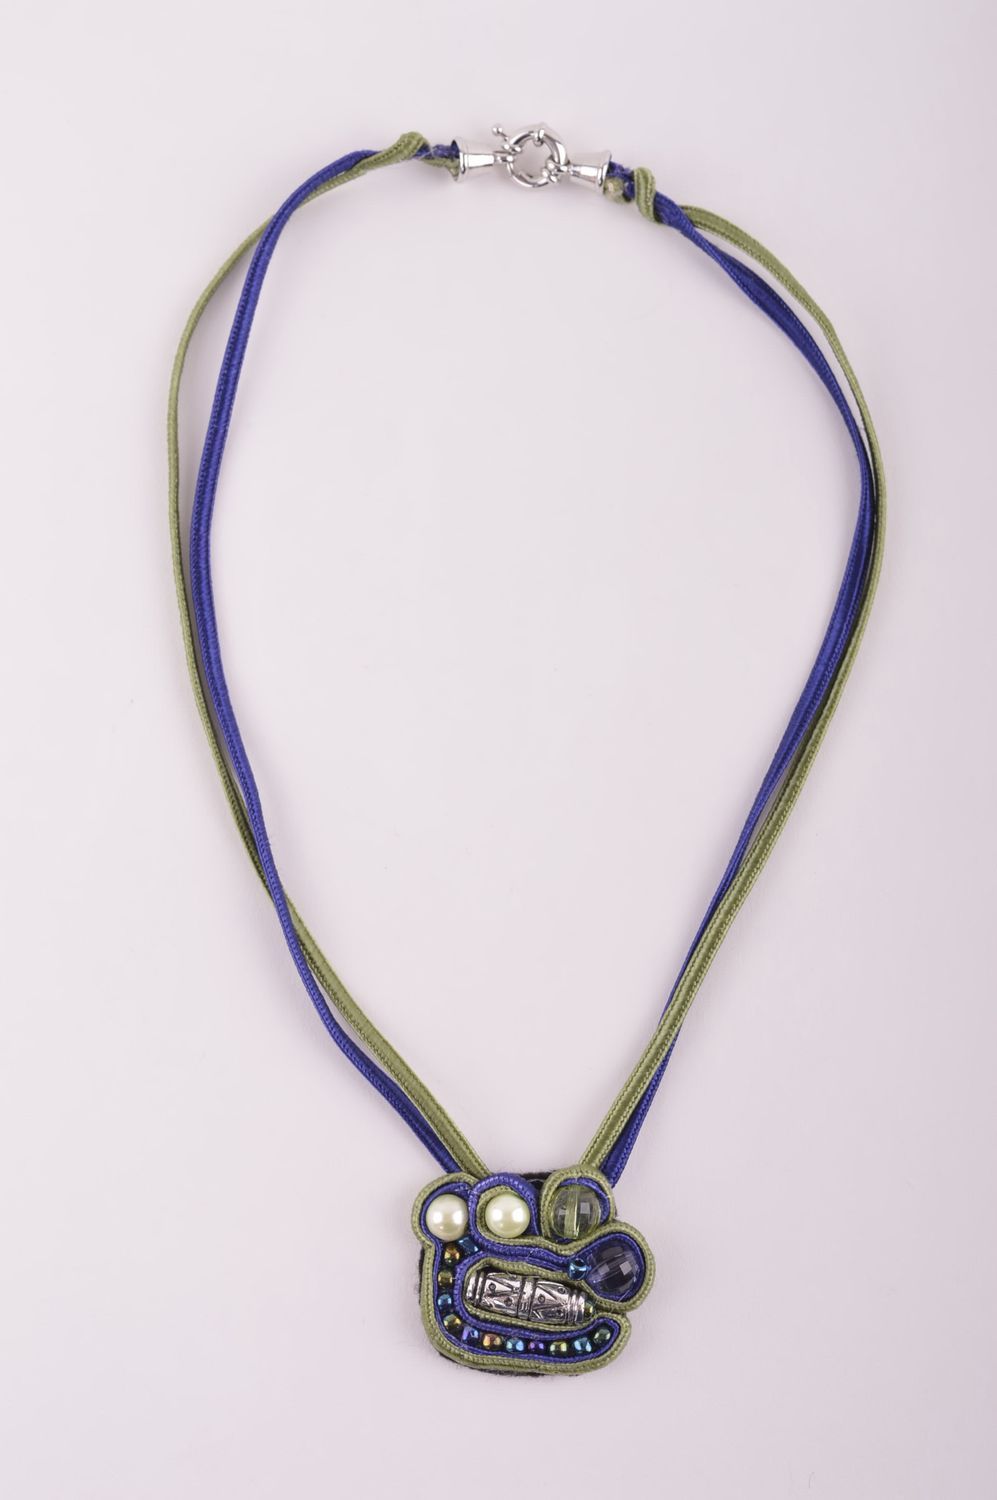 Soutache pendant handmade soutache pendant embroidered pendant with beads photo 2